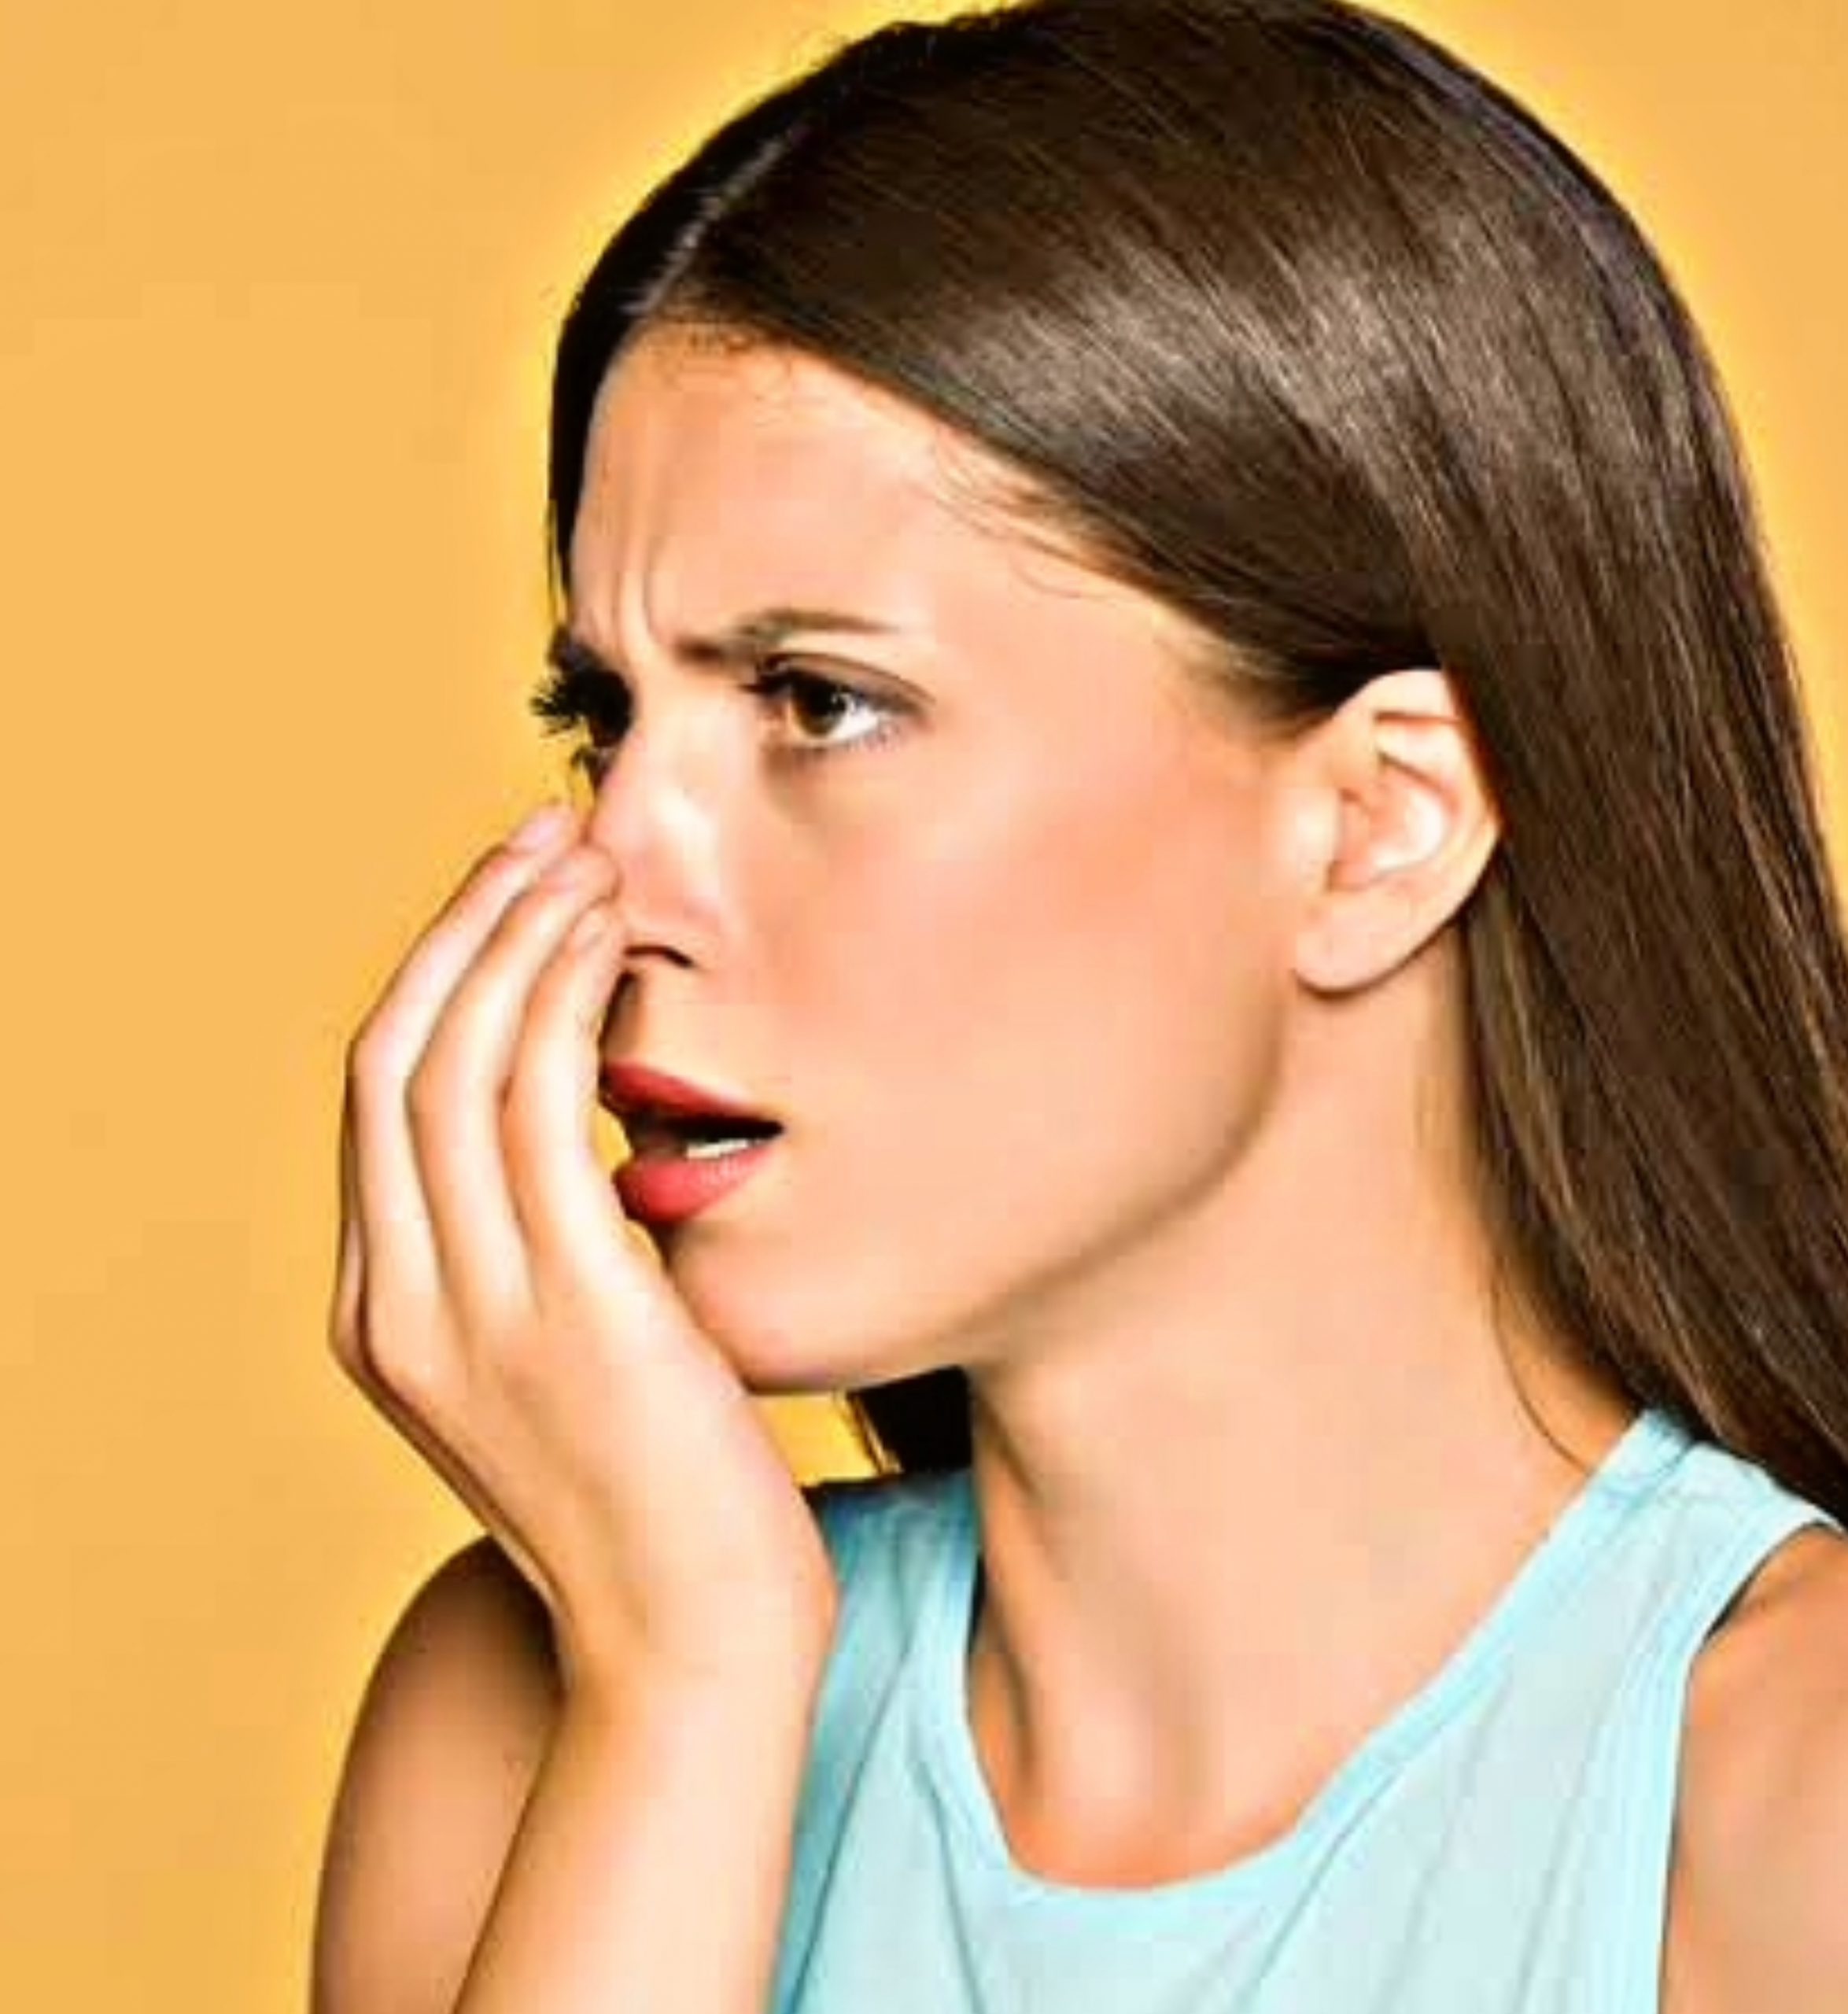 bad breath home remedies